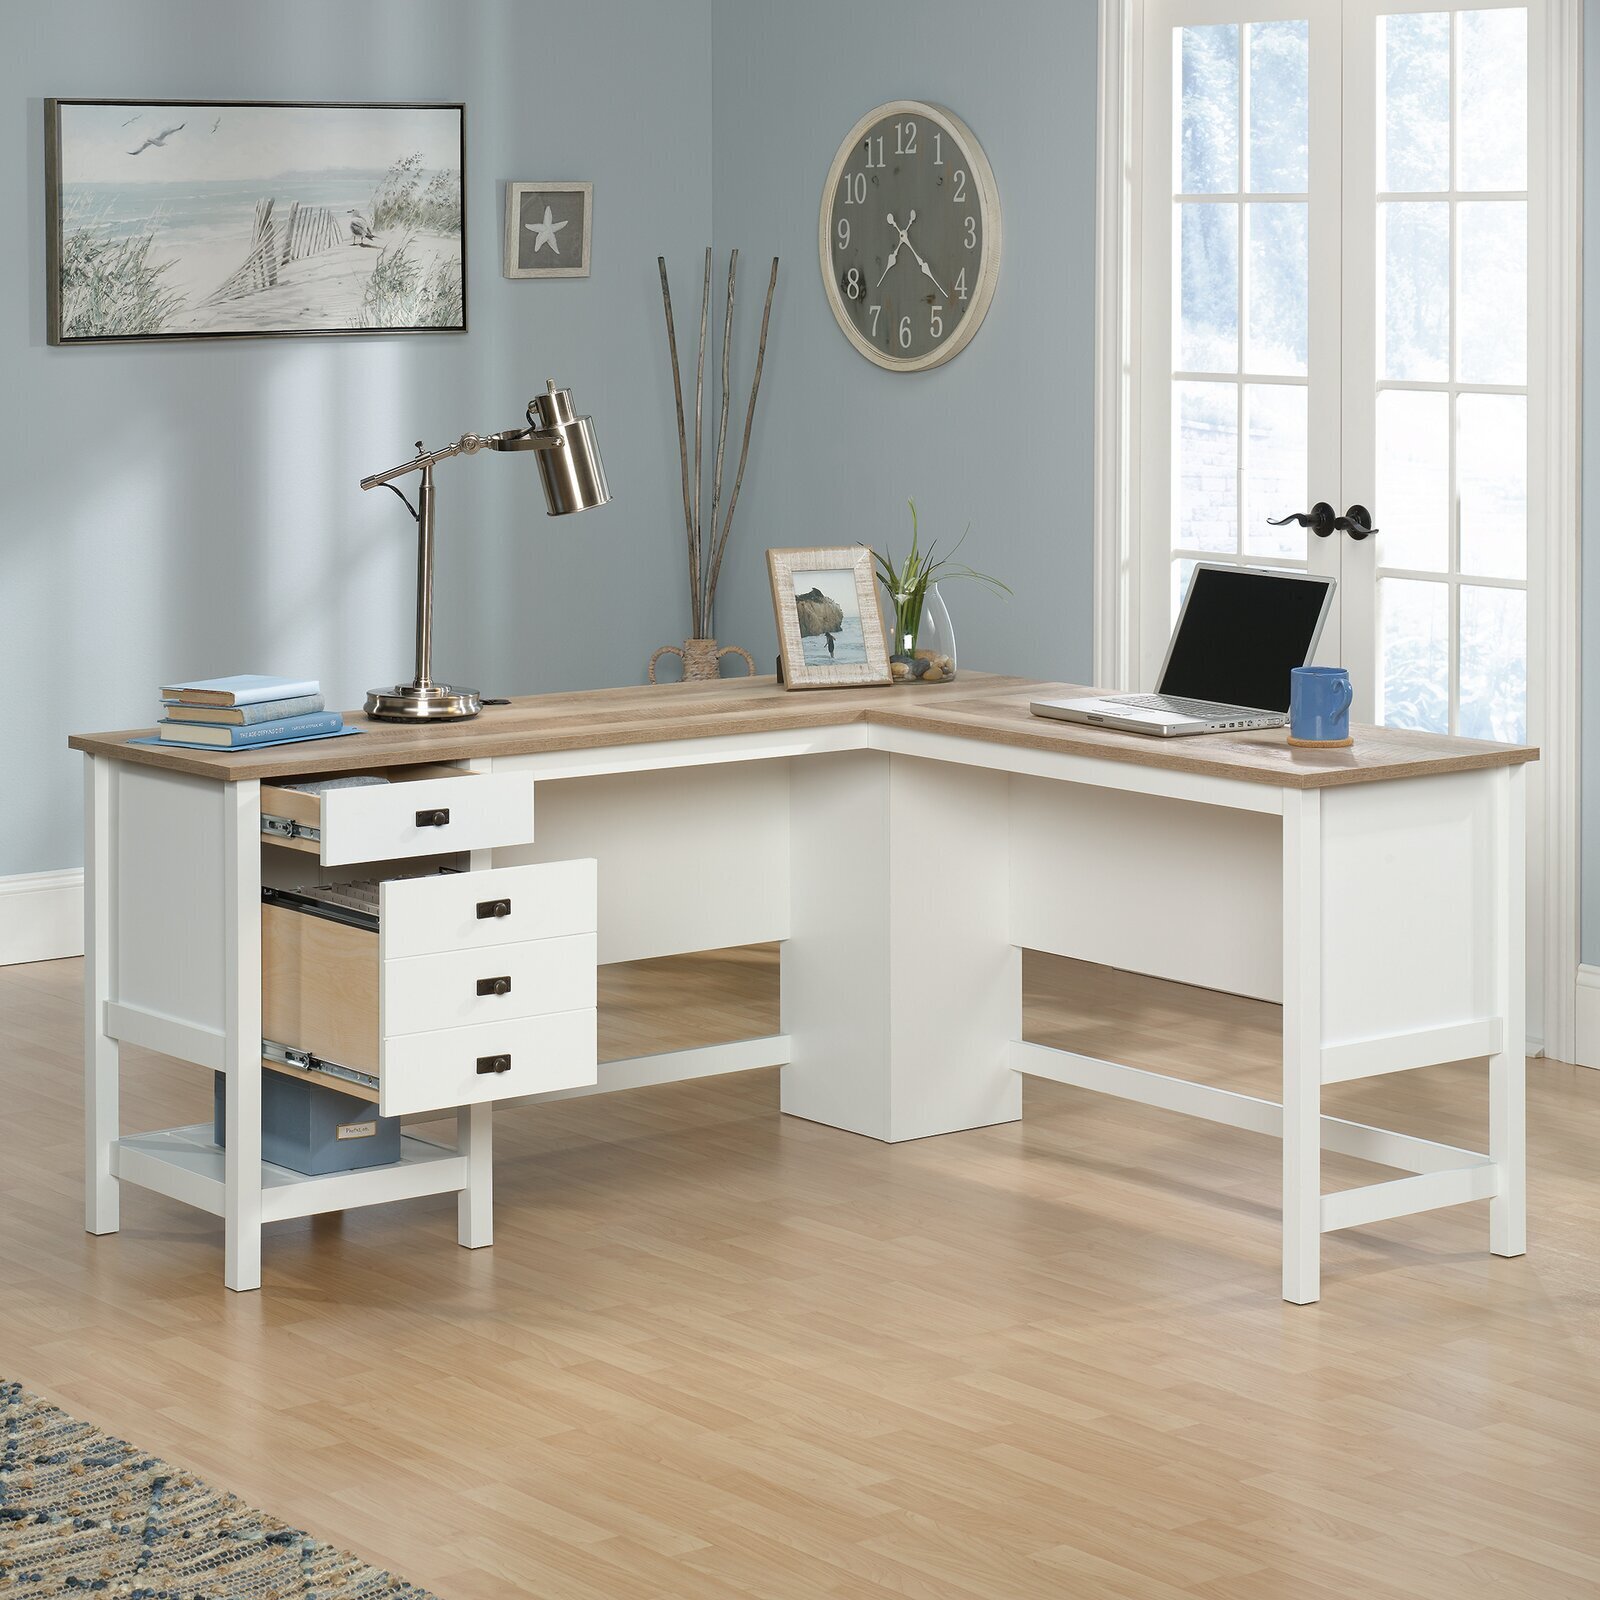 Large Elegant Desk With Drawers 